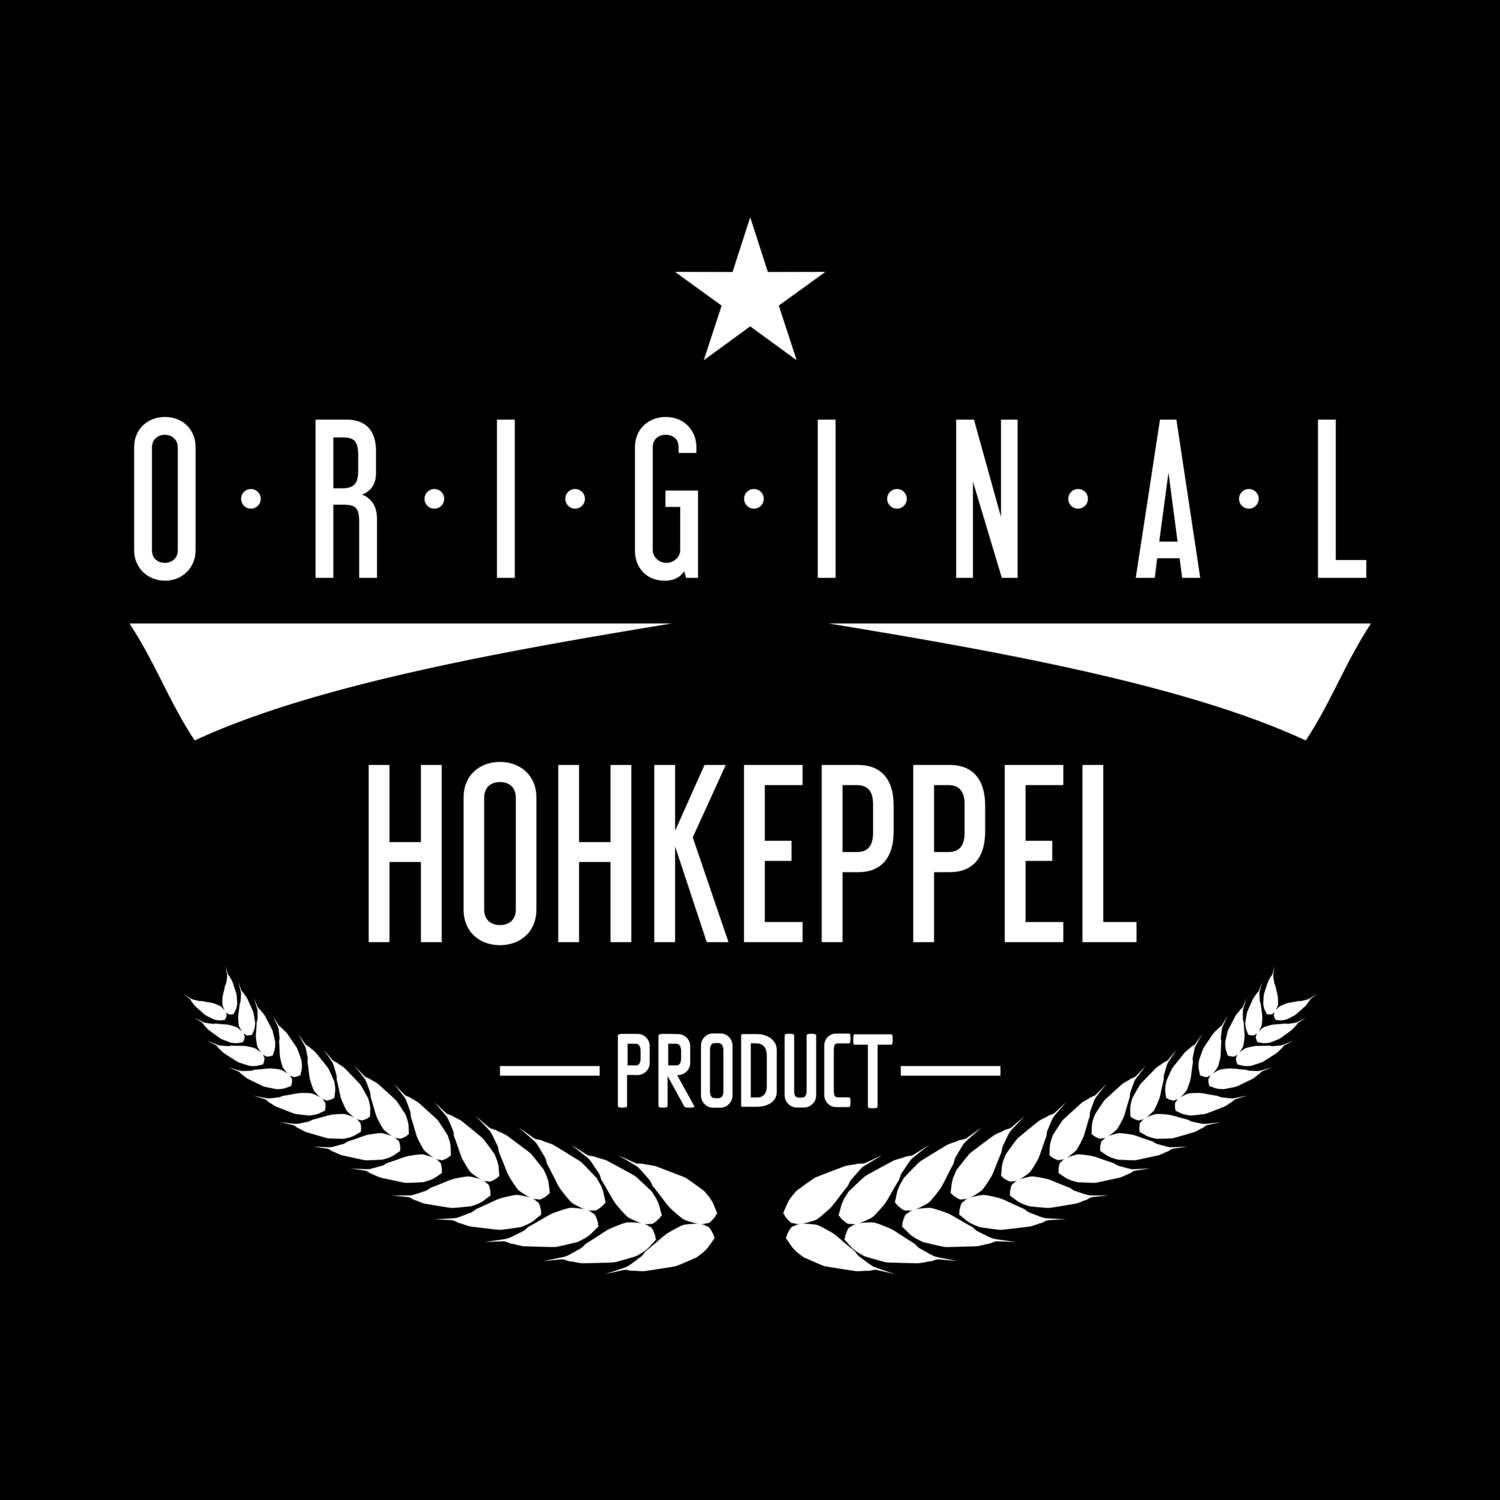 Hohkeppel T-Shirt »Original Product«